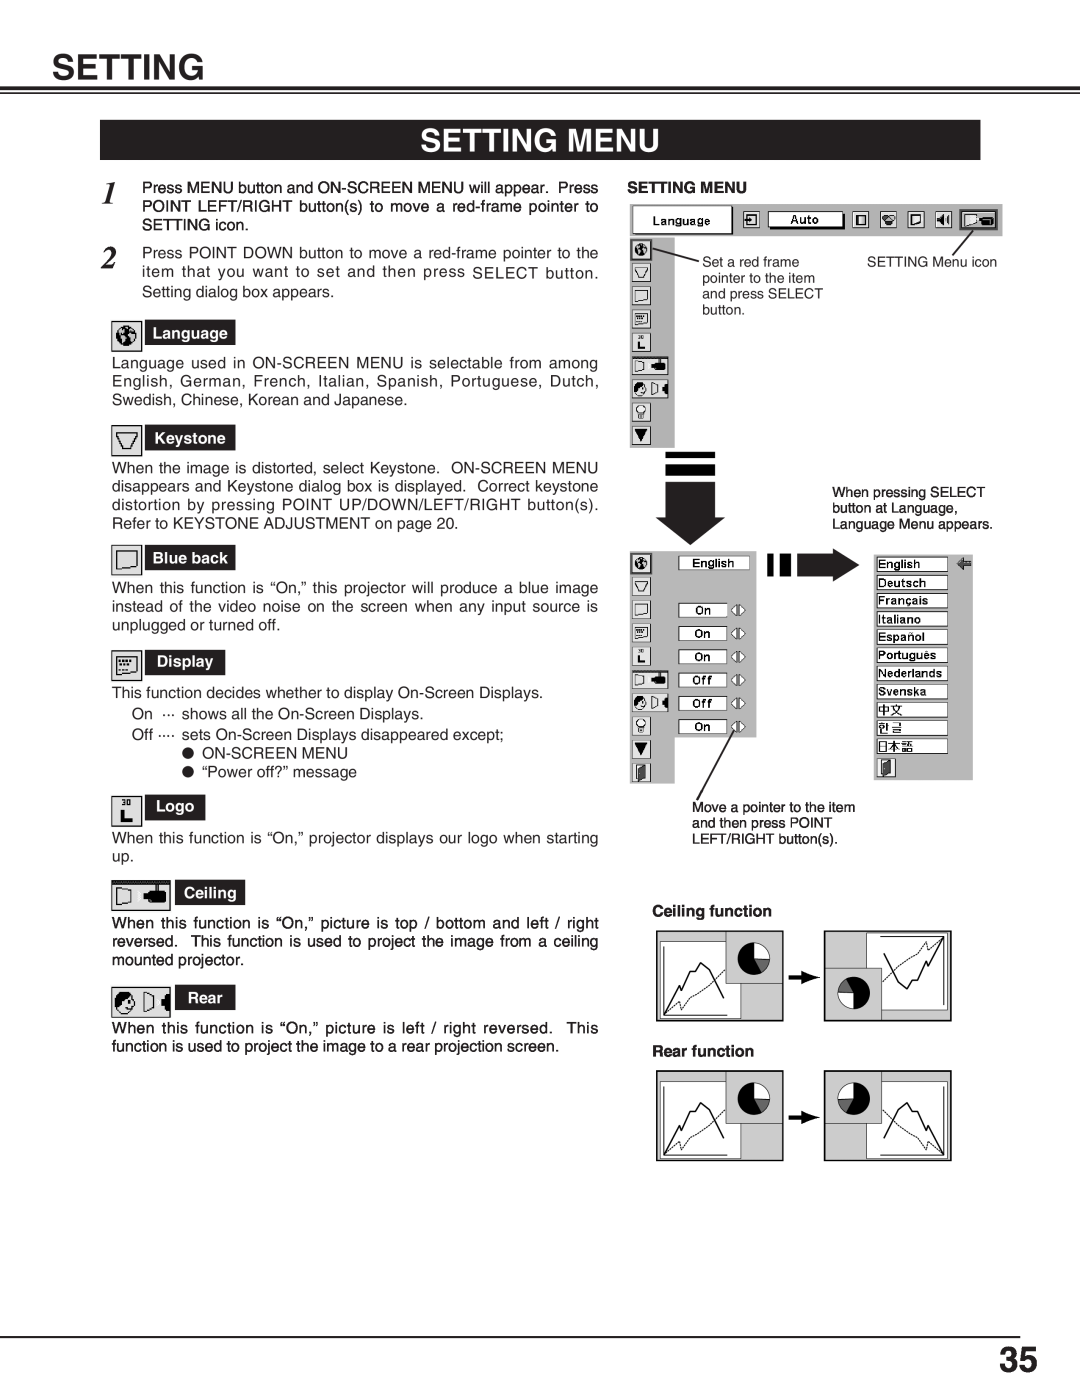 BOXLIGHT cp-16t manual Setting Menu, Language, Keystone, Blue back, Display, Logo, Ceiling, Rear 